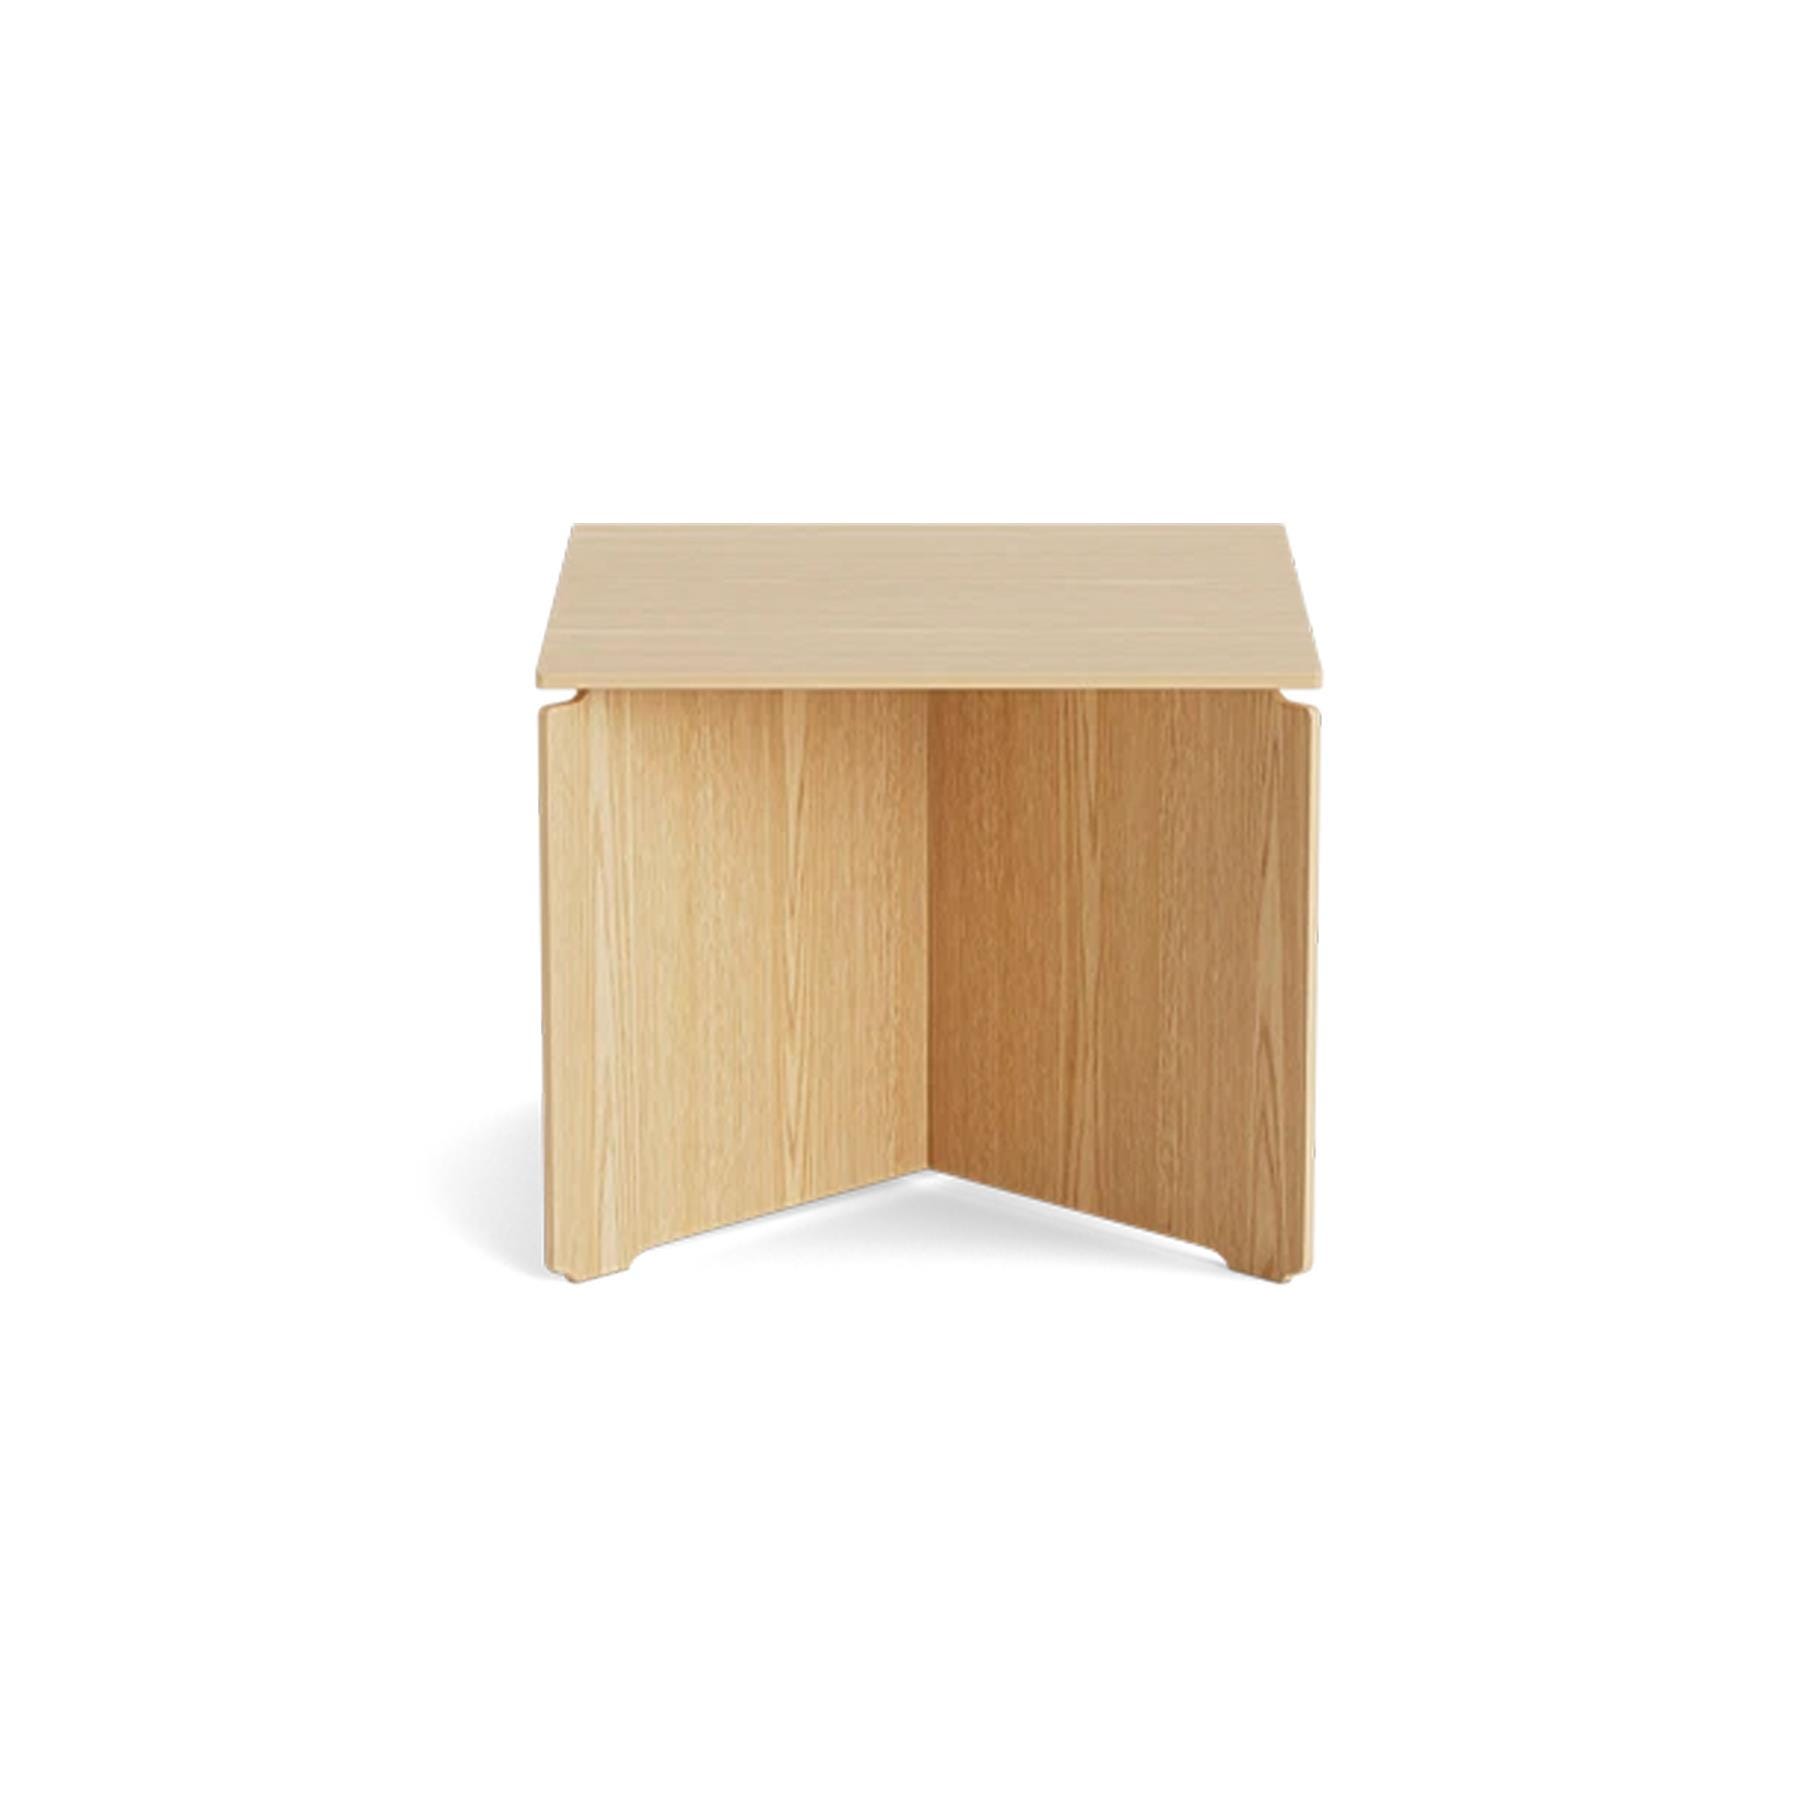 Make Nordic Crossboarder Coffee Table Natural Oak Veneer Medium Light Wood Designer Furniture From Holloways Of Ludlow